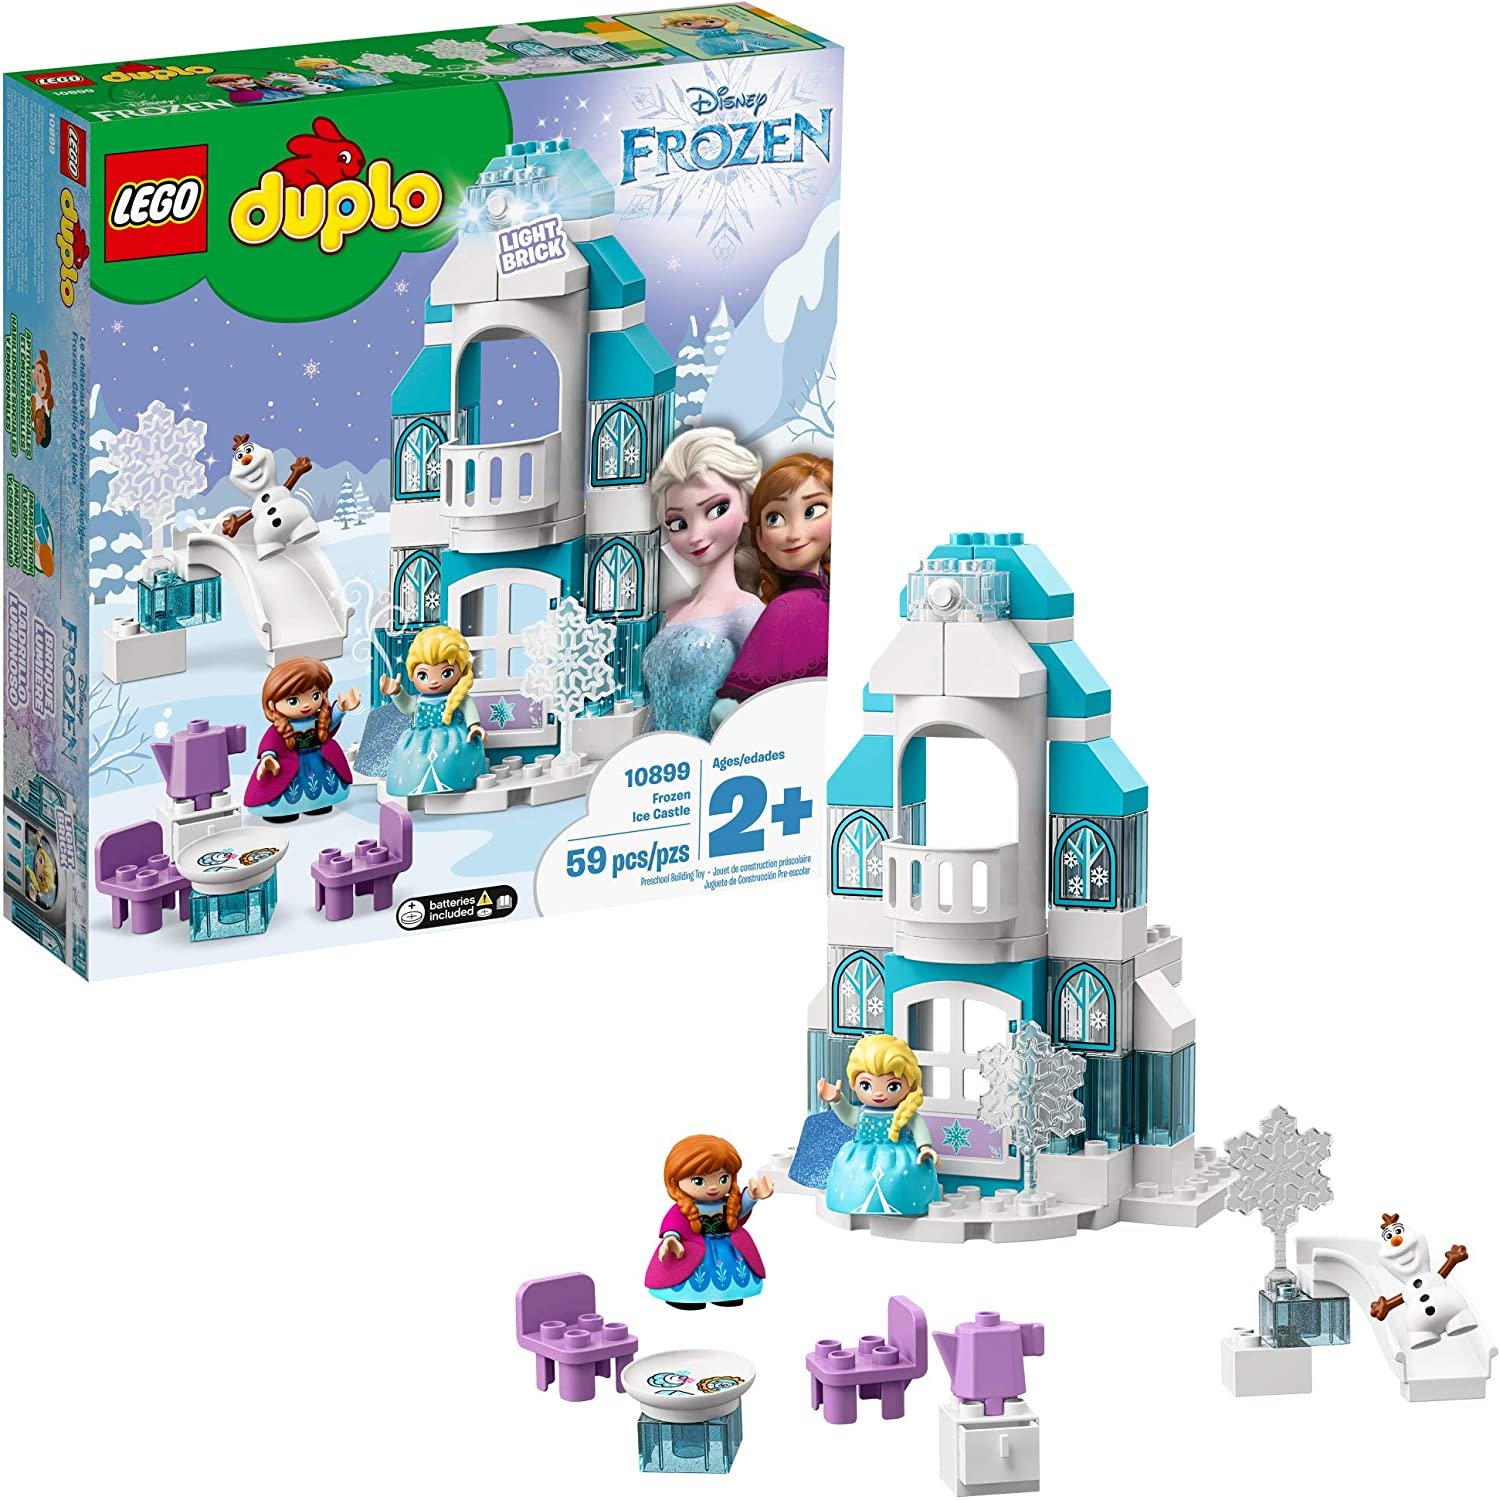 LEGO DUPLO Disney Frozen Ice Castle 10899 Building Blocks - 59 Pieces